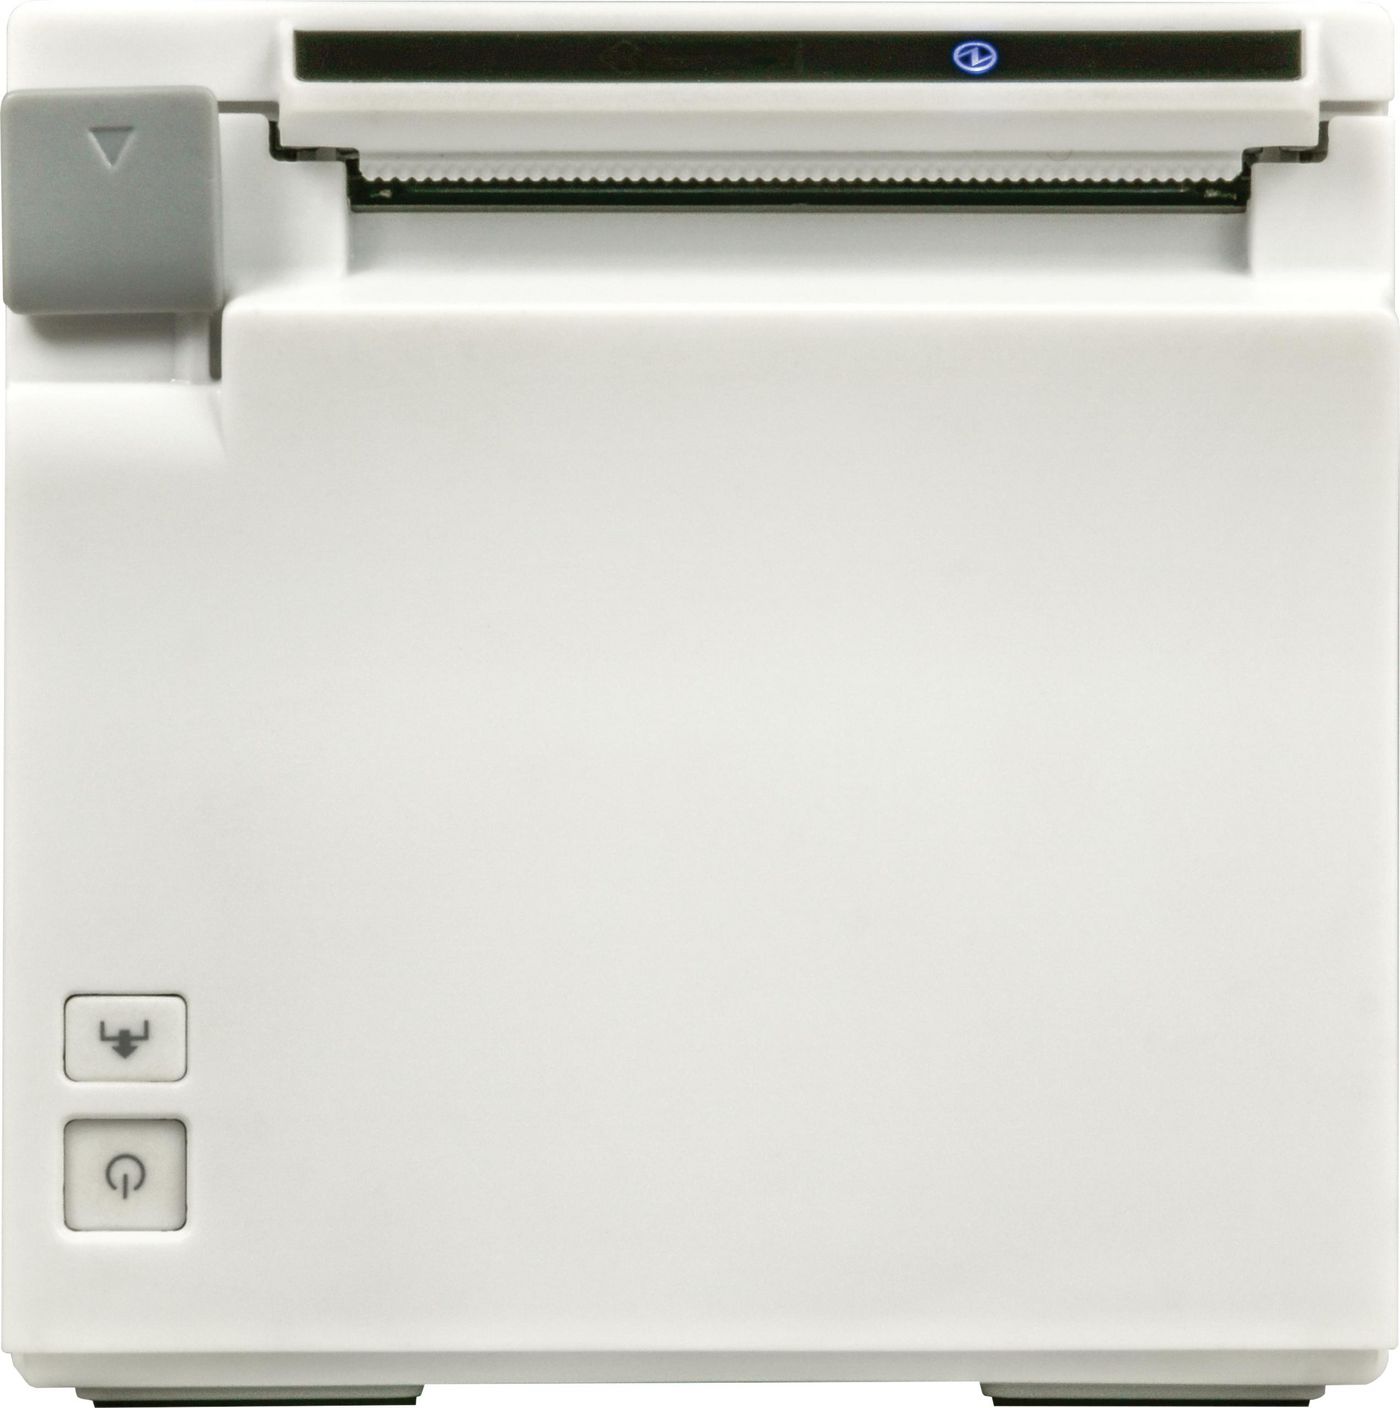 Tm-m30ii-h (141a0) - Pos Printer - Thermal - 80mm - USB Ethernet Bt Lightng Sd